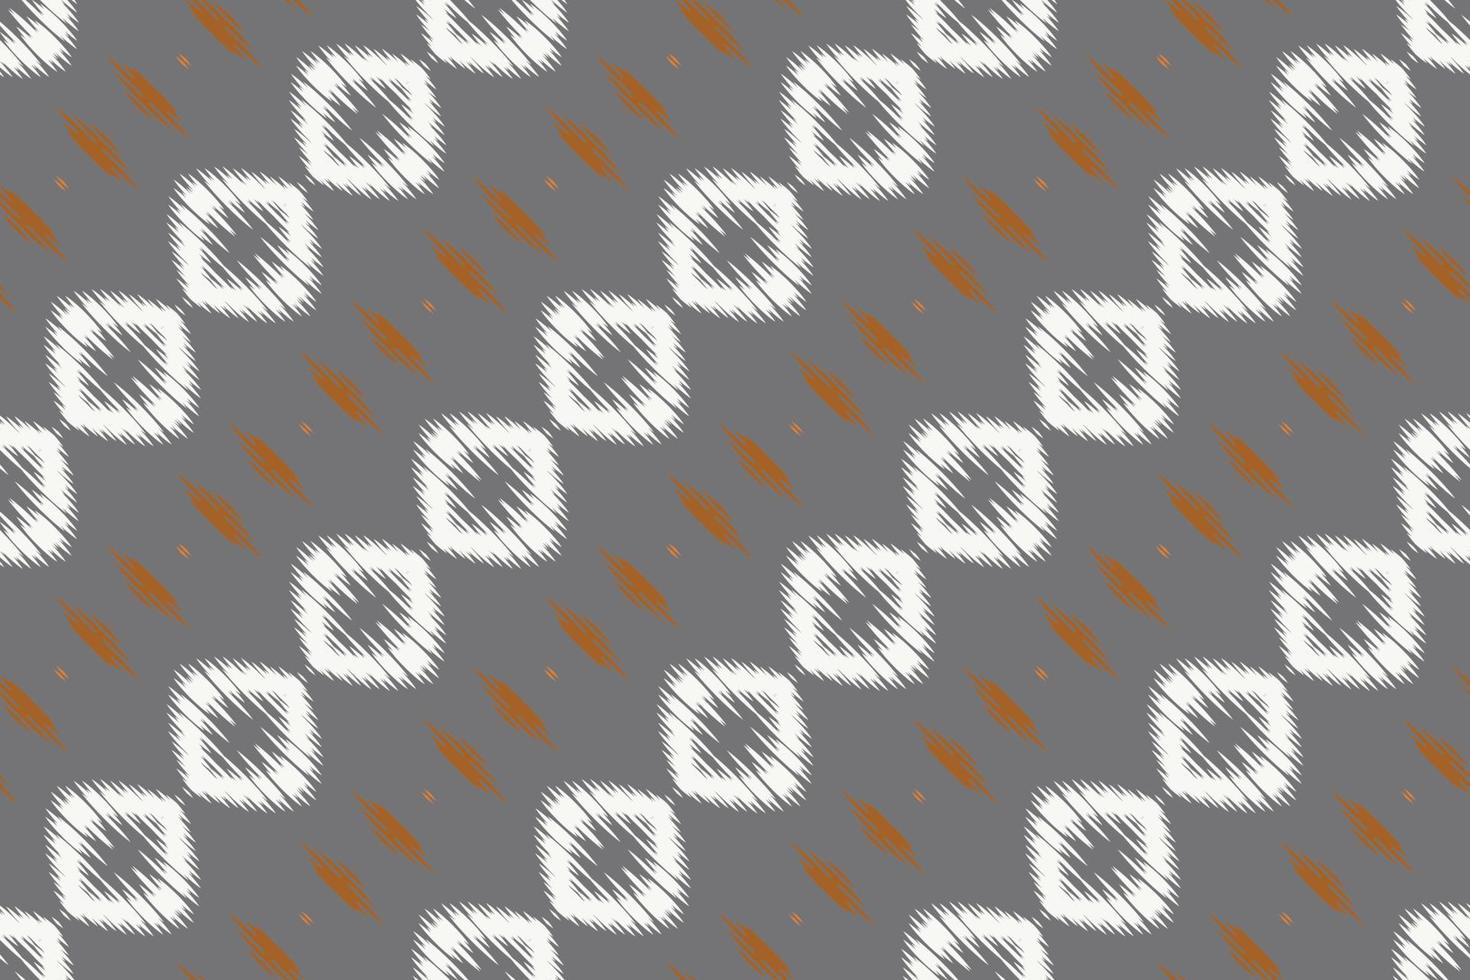 ikkat ou ikat impressão batik têxtil padrão sem costura design de vetor digital para impressão saree kurti borneo tecido borda pincel símbolos amostras elegantes